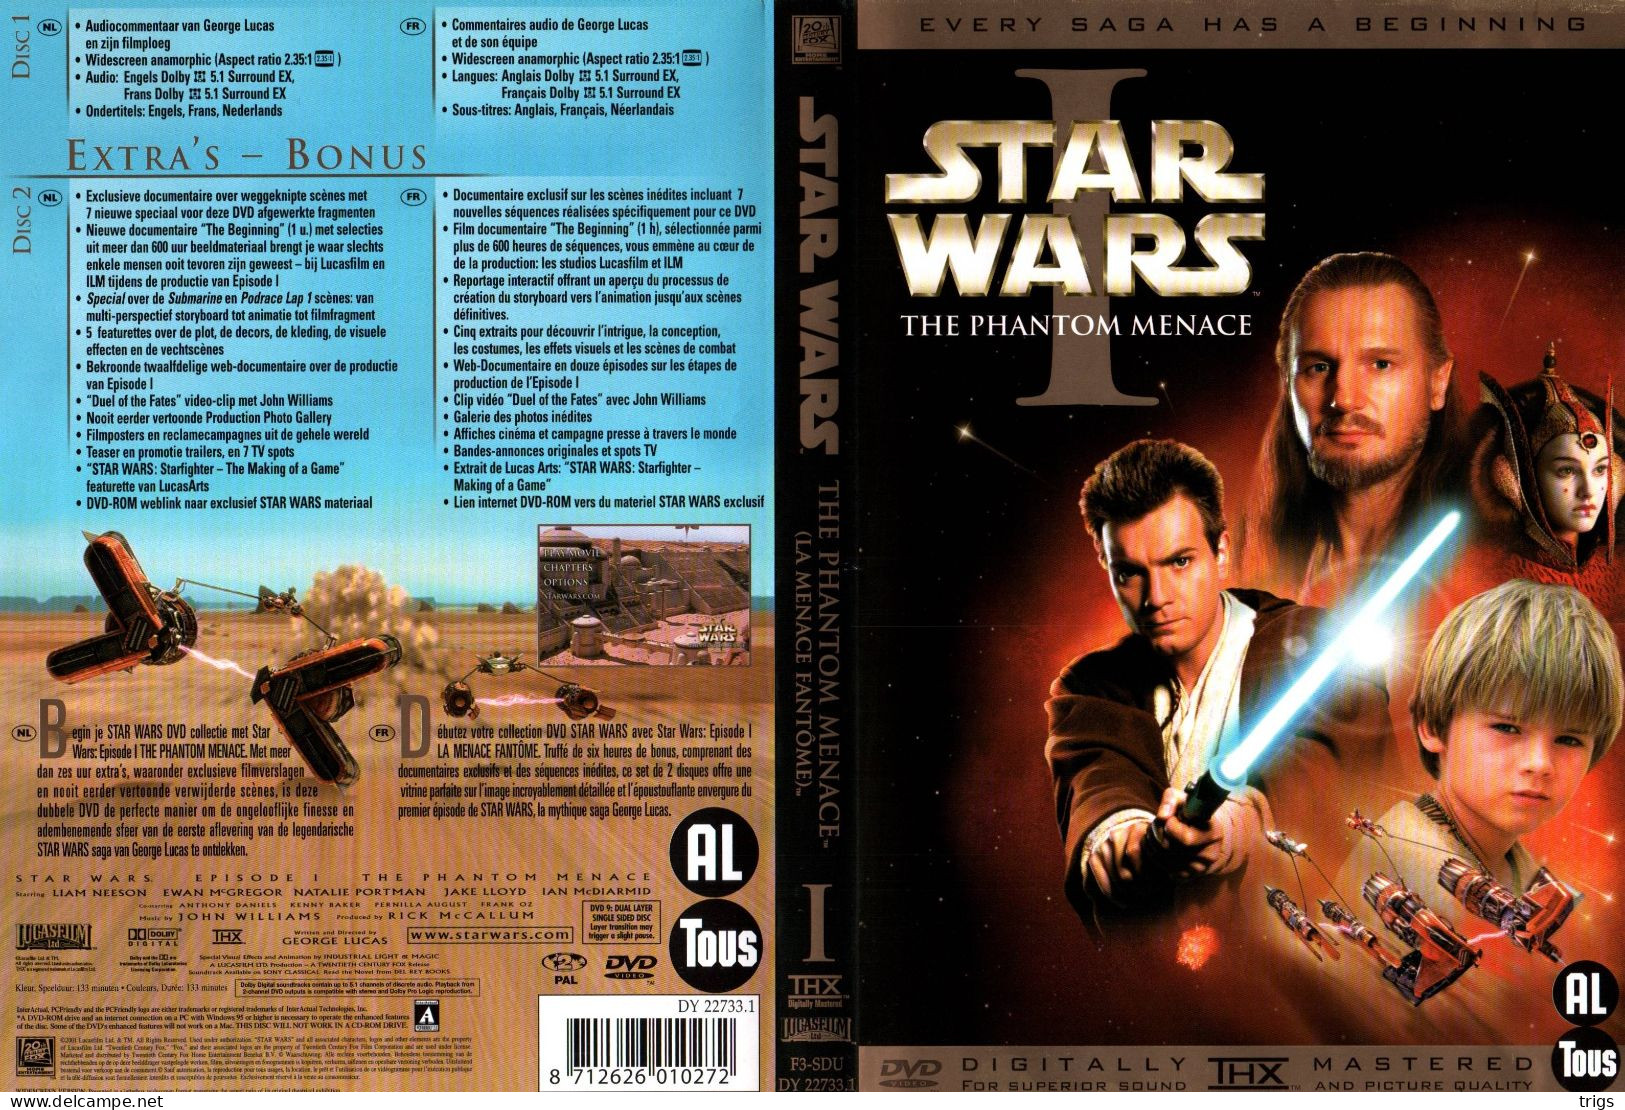 DVD - Star Wars: Episode I - The Phantom Menace (2 DISCS) - Action, Adventure